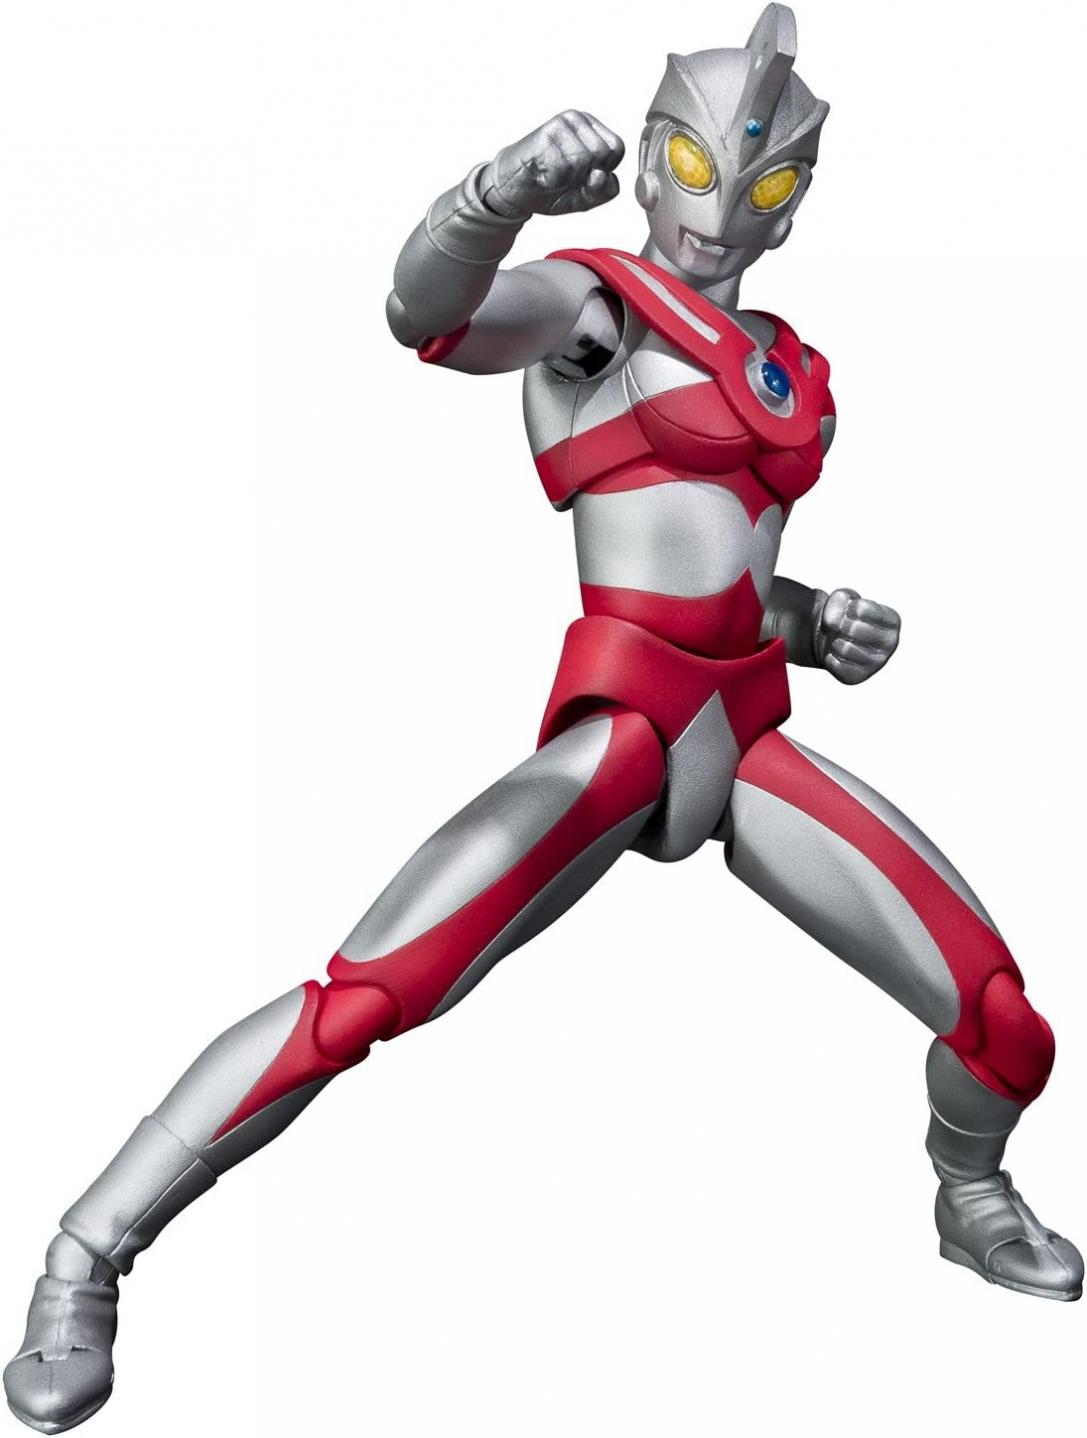 Bandai Tamashii Nations Ultraman Ace Action Figure